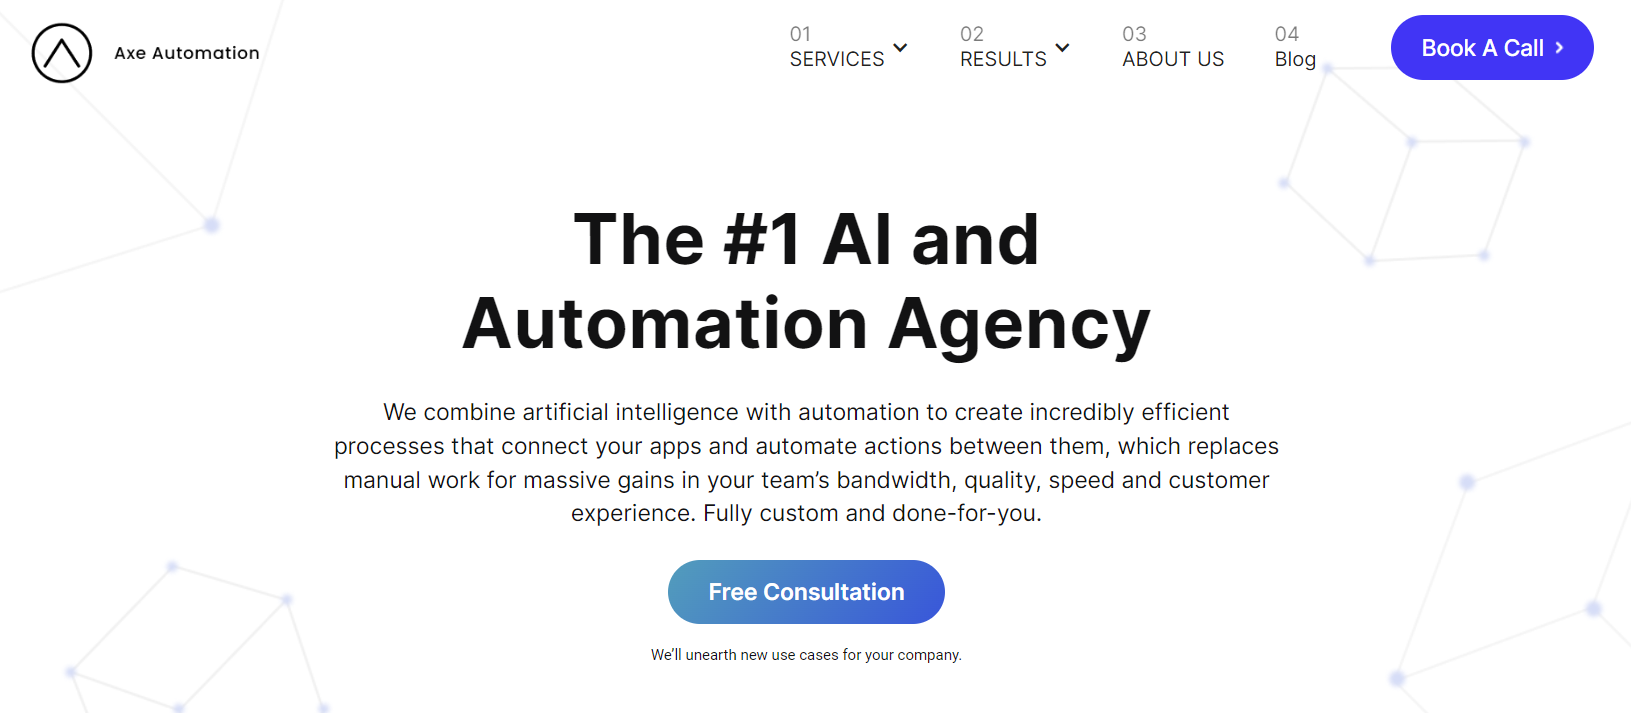 Axe Automation